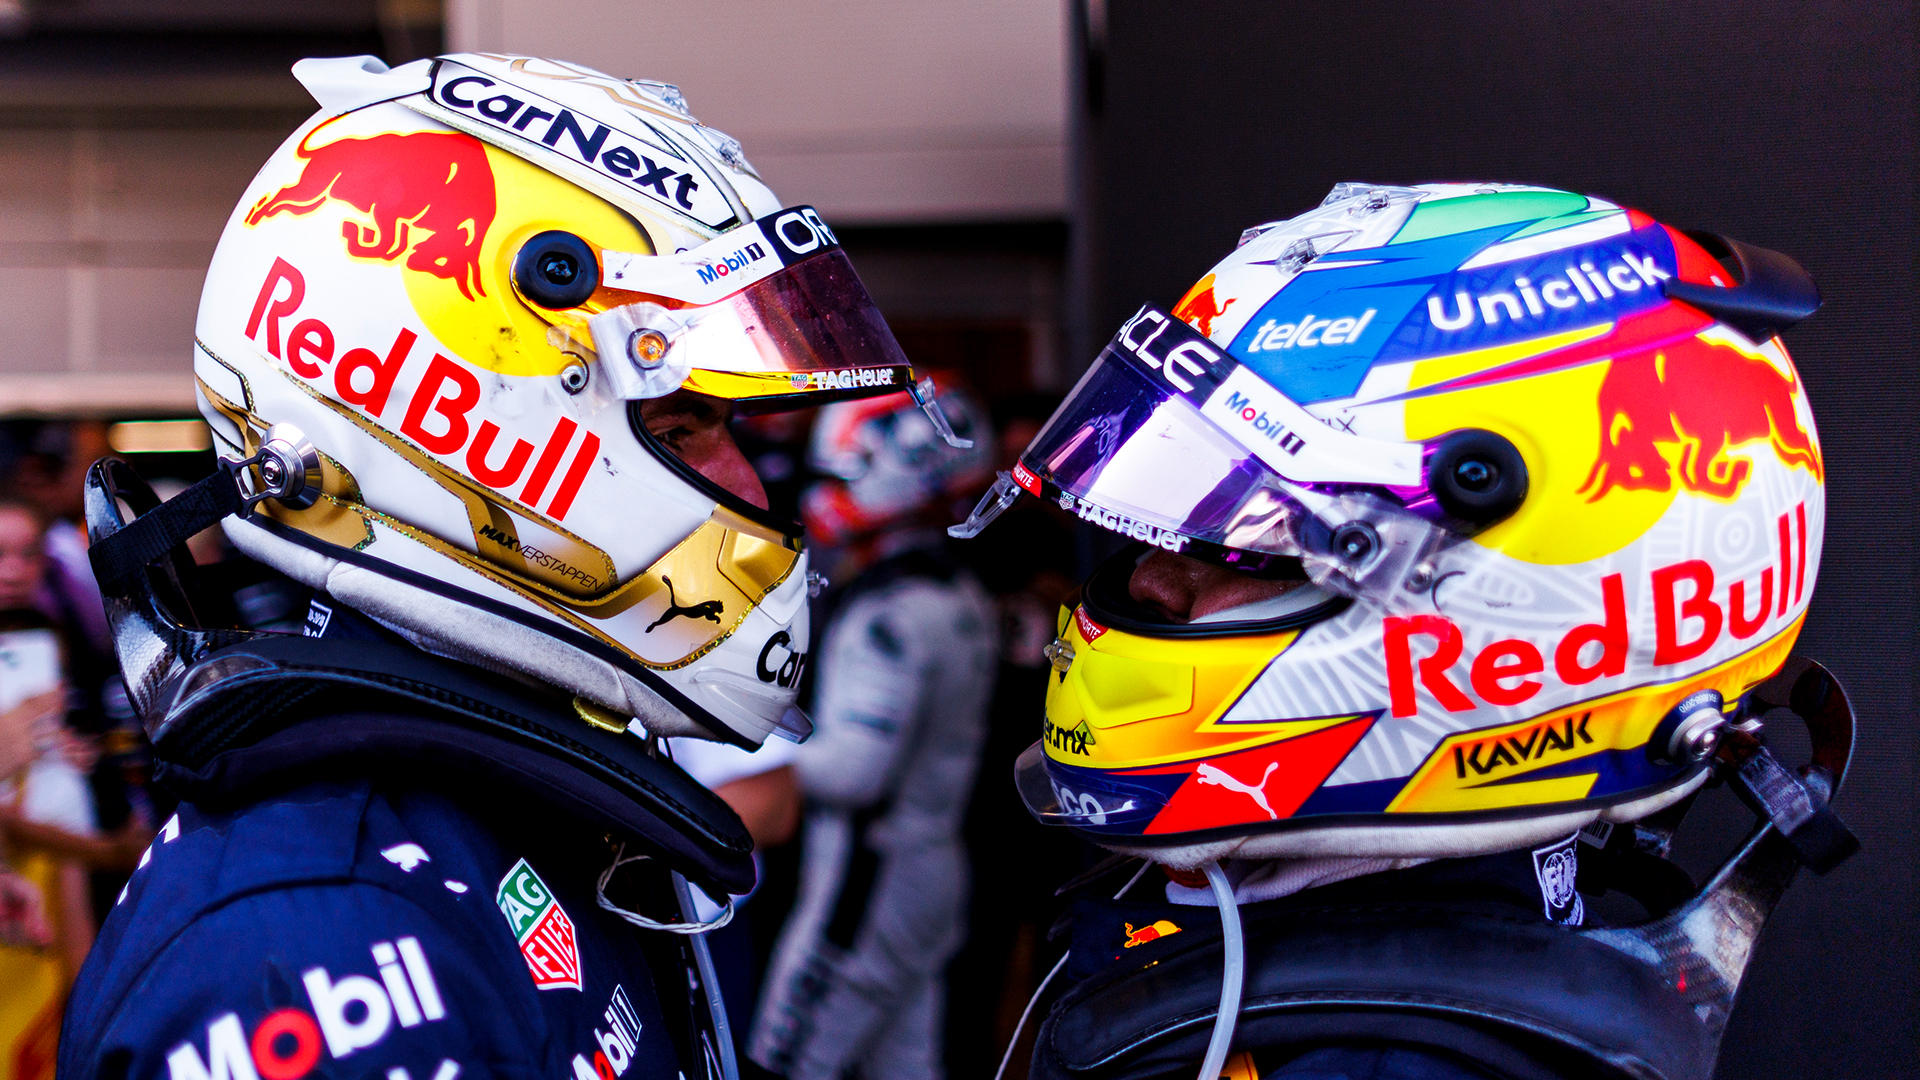 “Ser el compañero de Max Verstappen es difícil”: Christian Horner sobre el rol de Checo Pérez